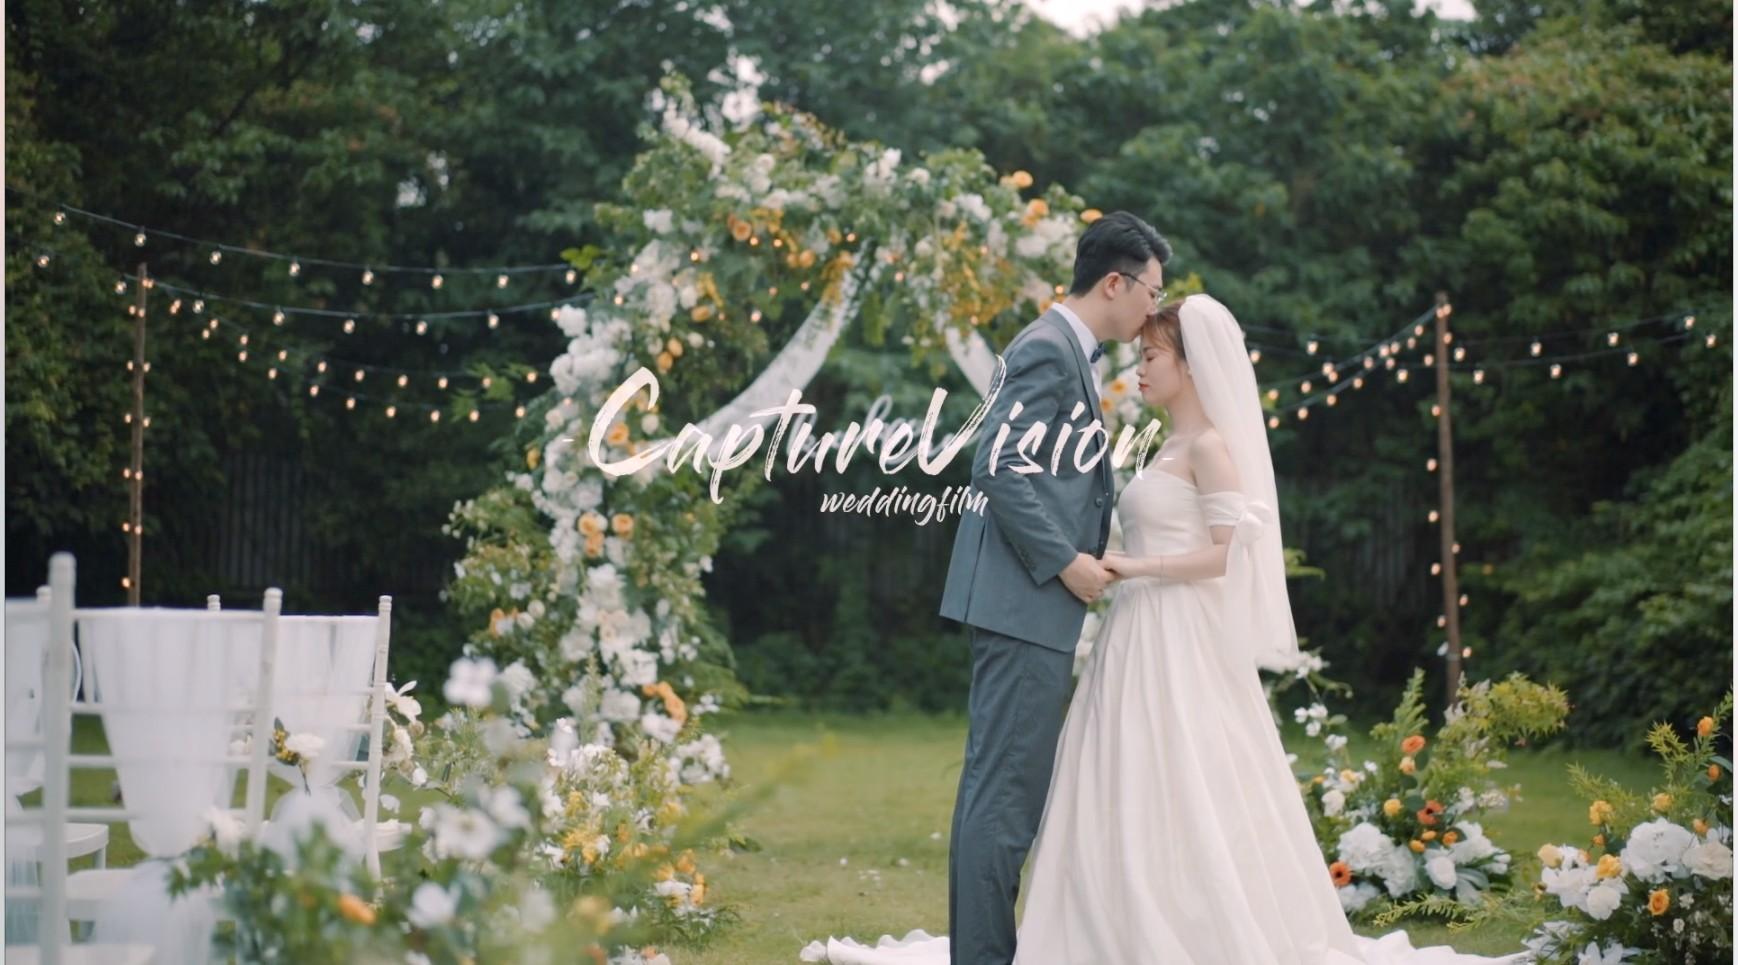 May.18th.2019 WeddingSde | CaptureVision婚礼电影